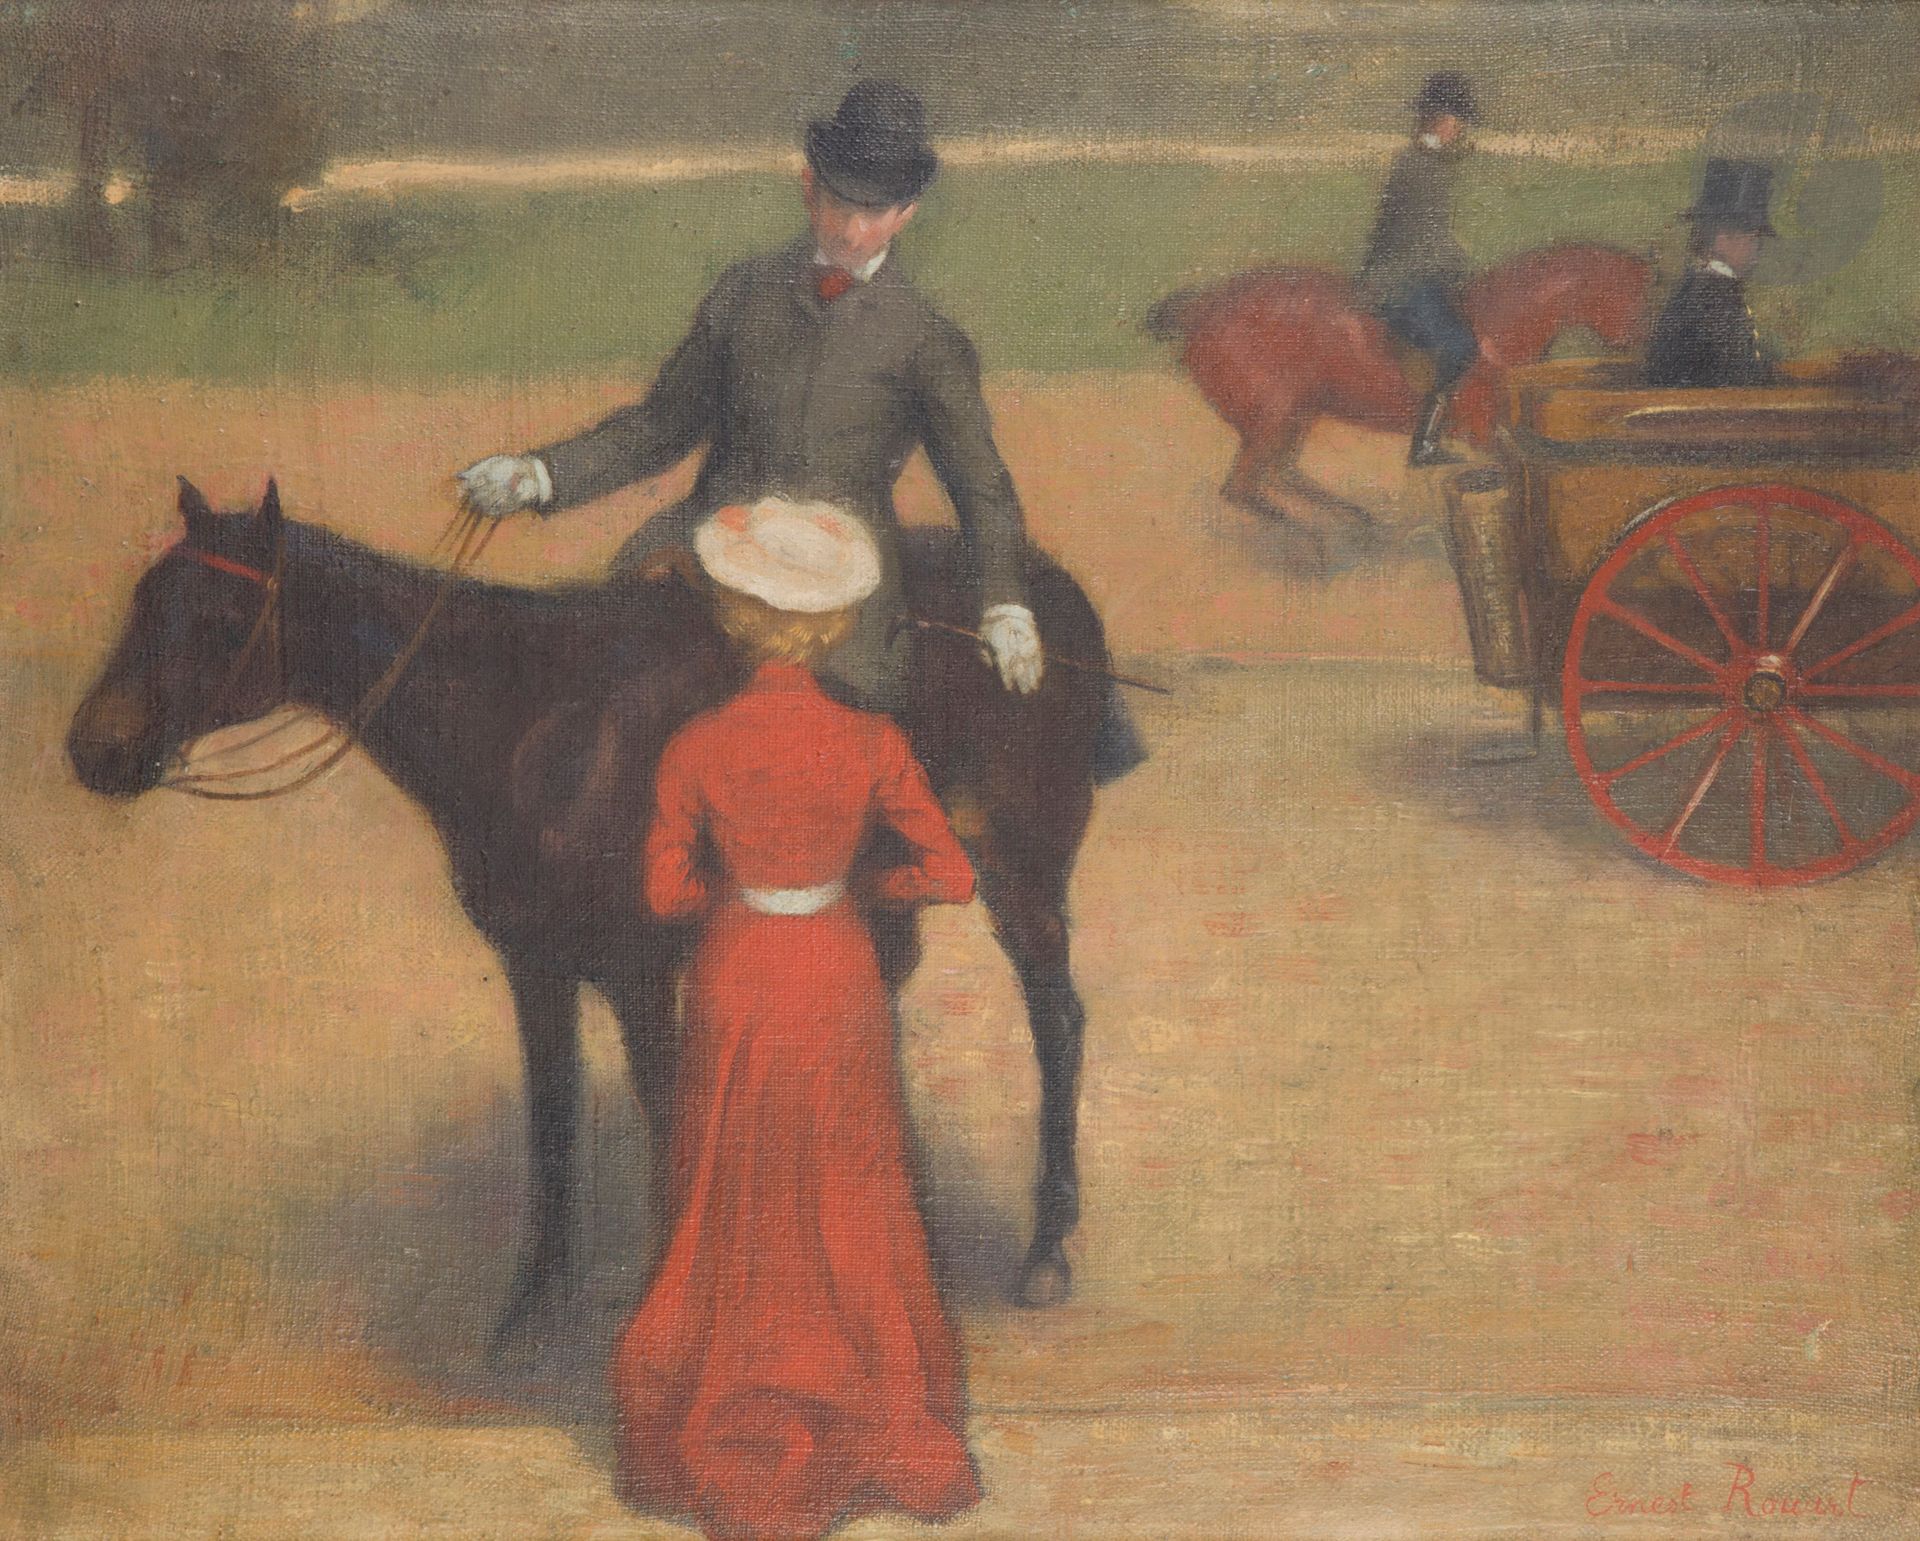 Null Ernest ROUART (1874-1948)
优雅的女人和骑手
布面油画。
右下方有签名。
38 x 46 厘米